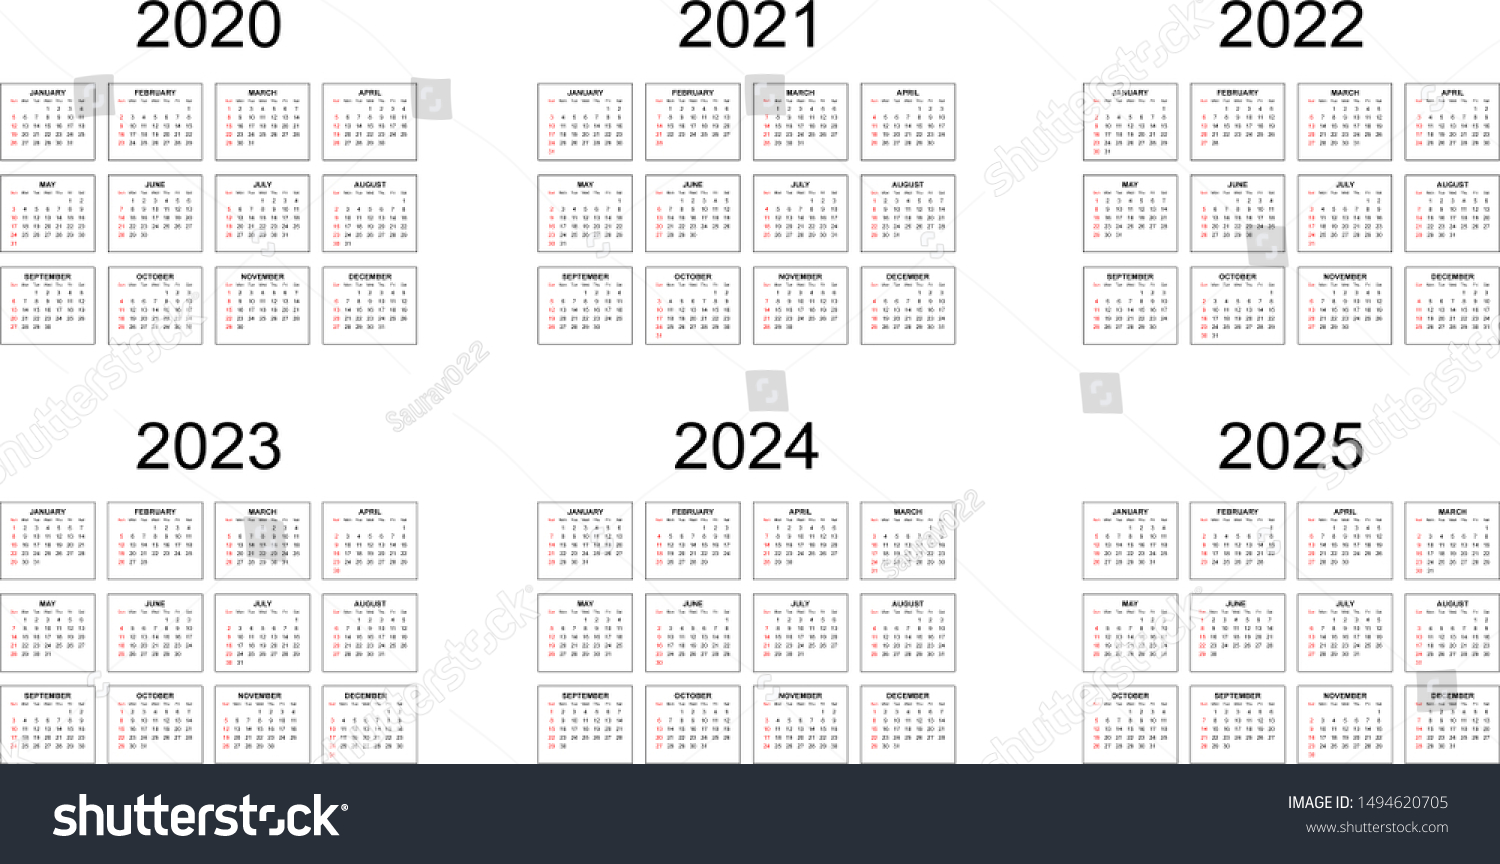 Календарик маленький 2024. Календарь с 2020 по 2025 год. Календарь 2020 2021 2022 на одном листе. Календарная сетка 2024. Календарь на 2022 год для ежедневника.